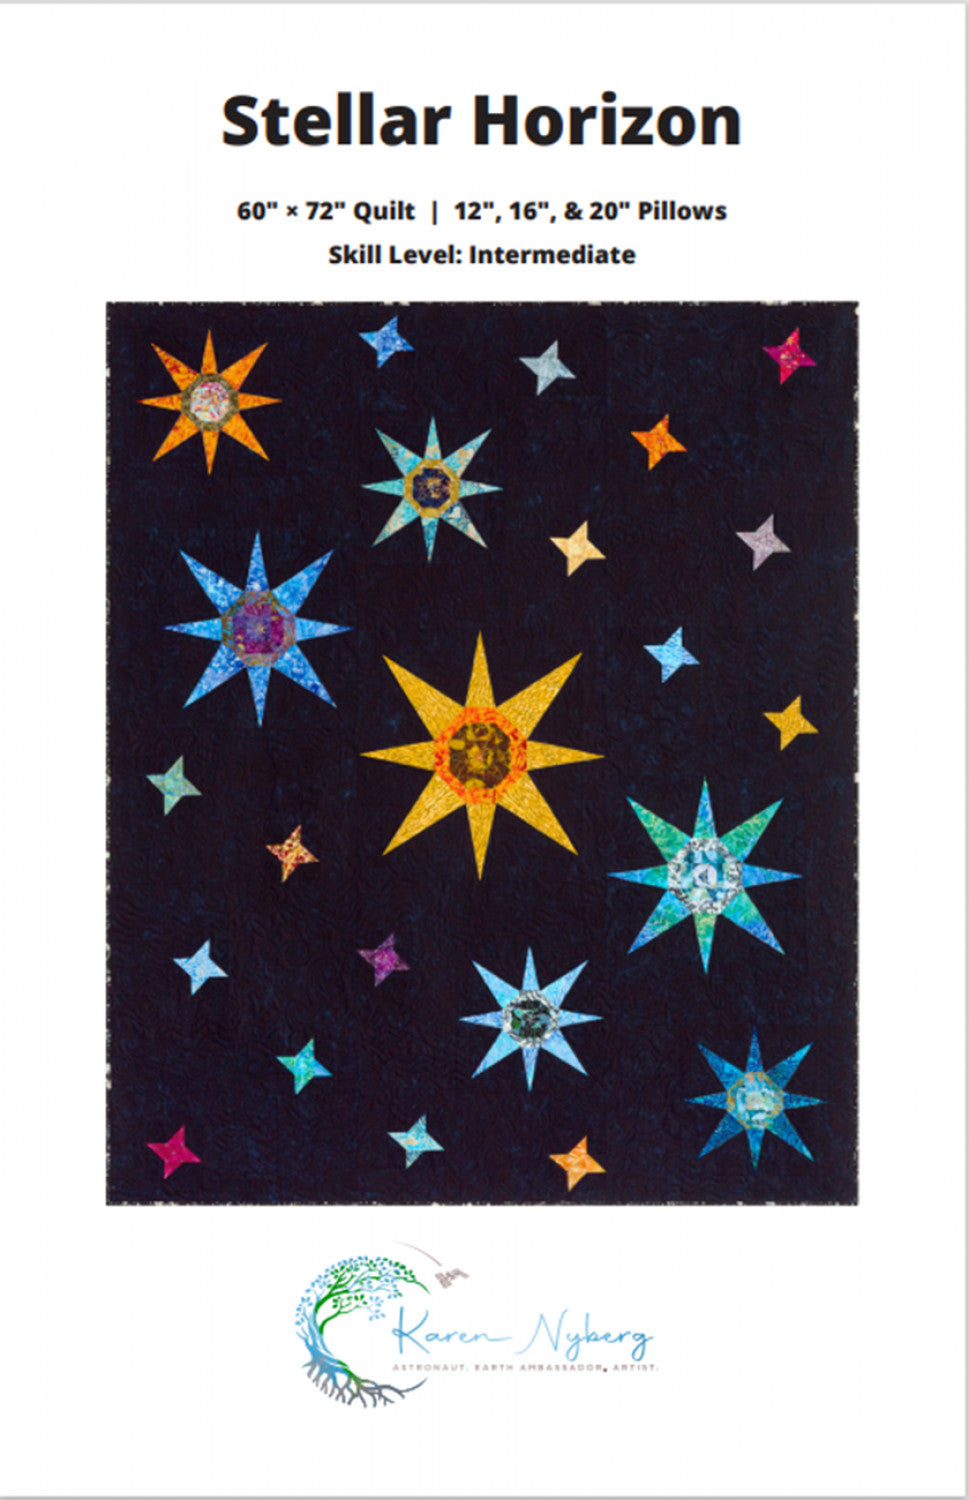 Stellar Horizon quilt and pillows pattern Karen Nyberg